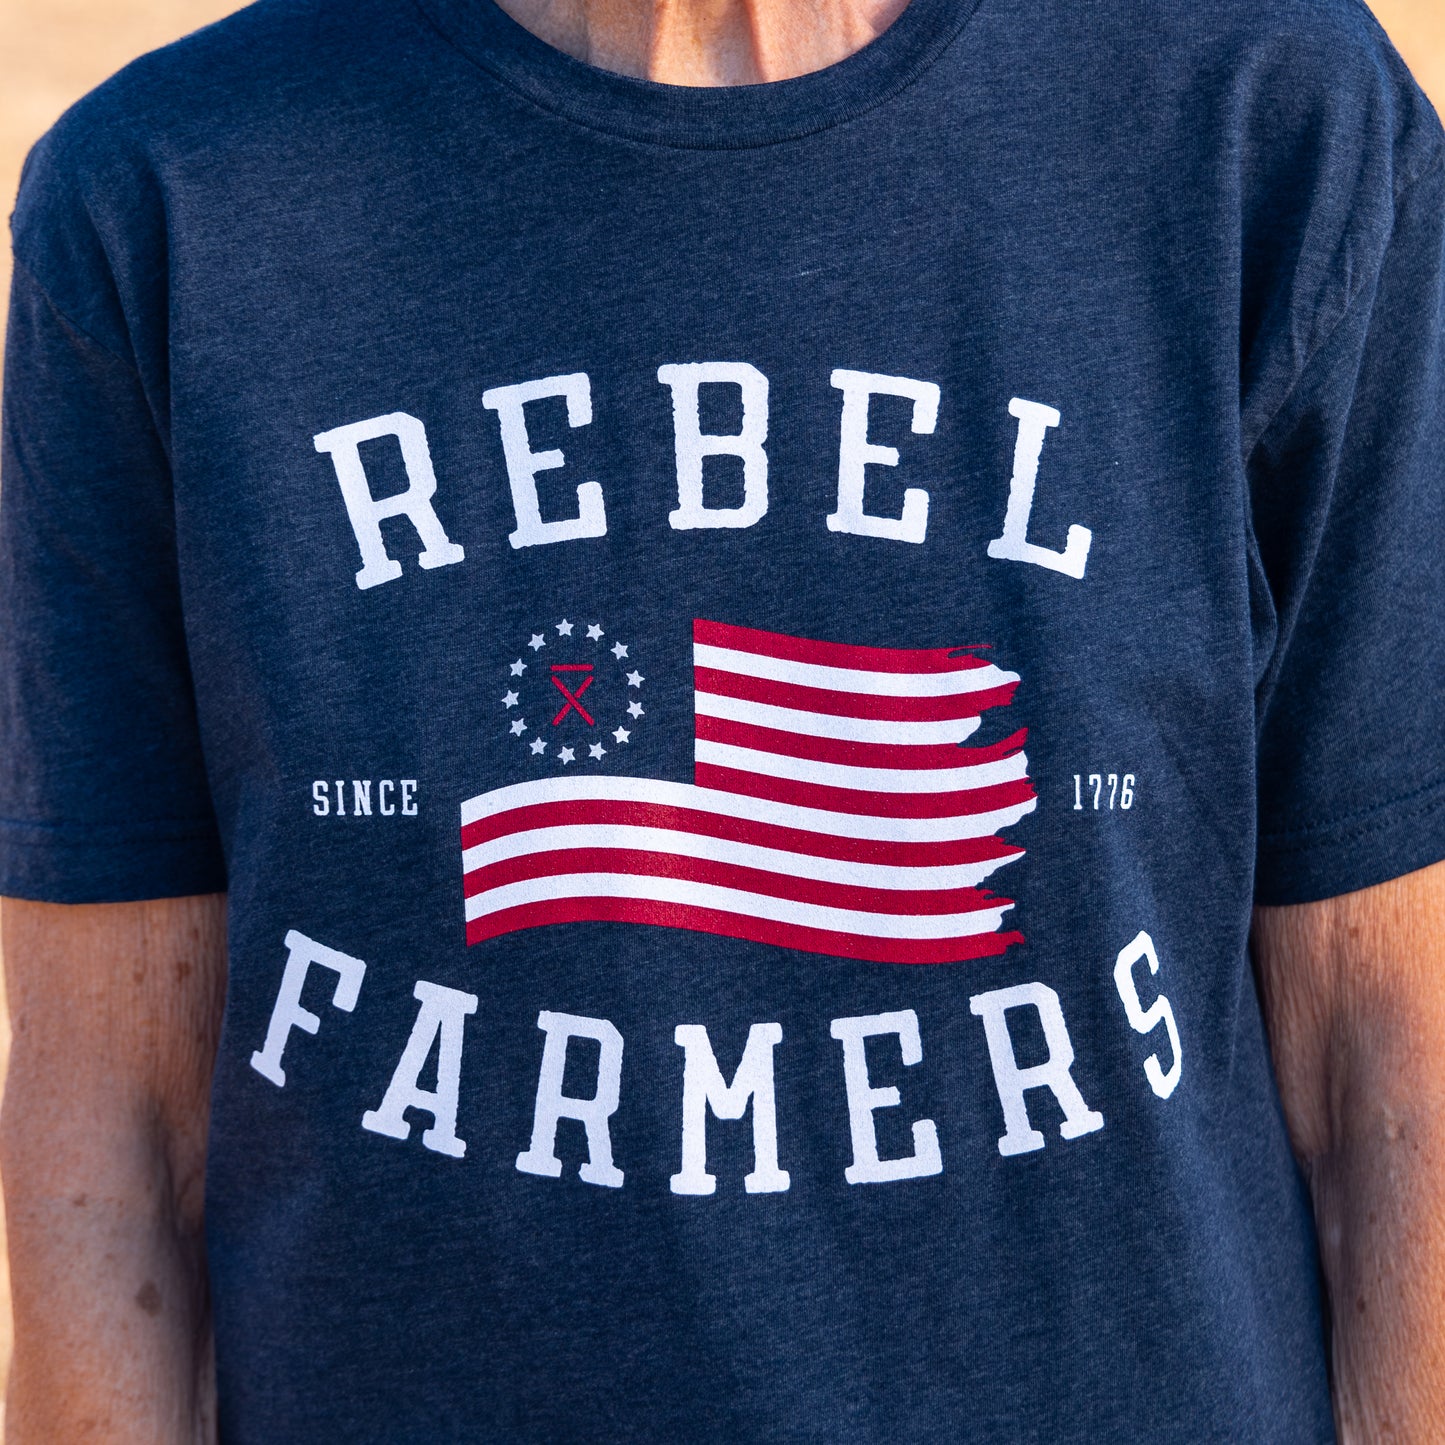 
                  
                    Rebel Farmers T-Shirt
                  
                